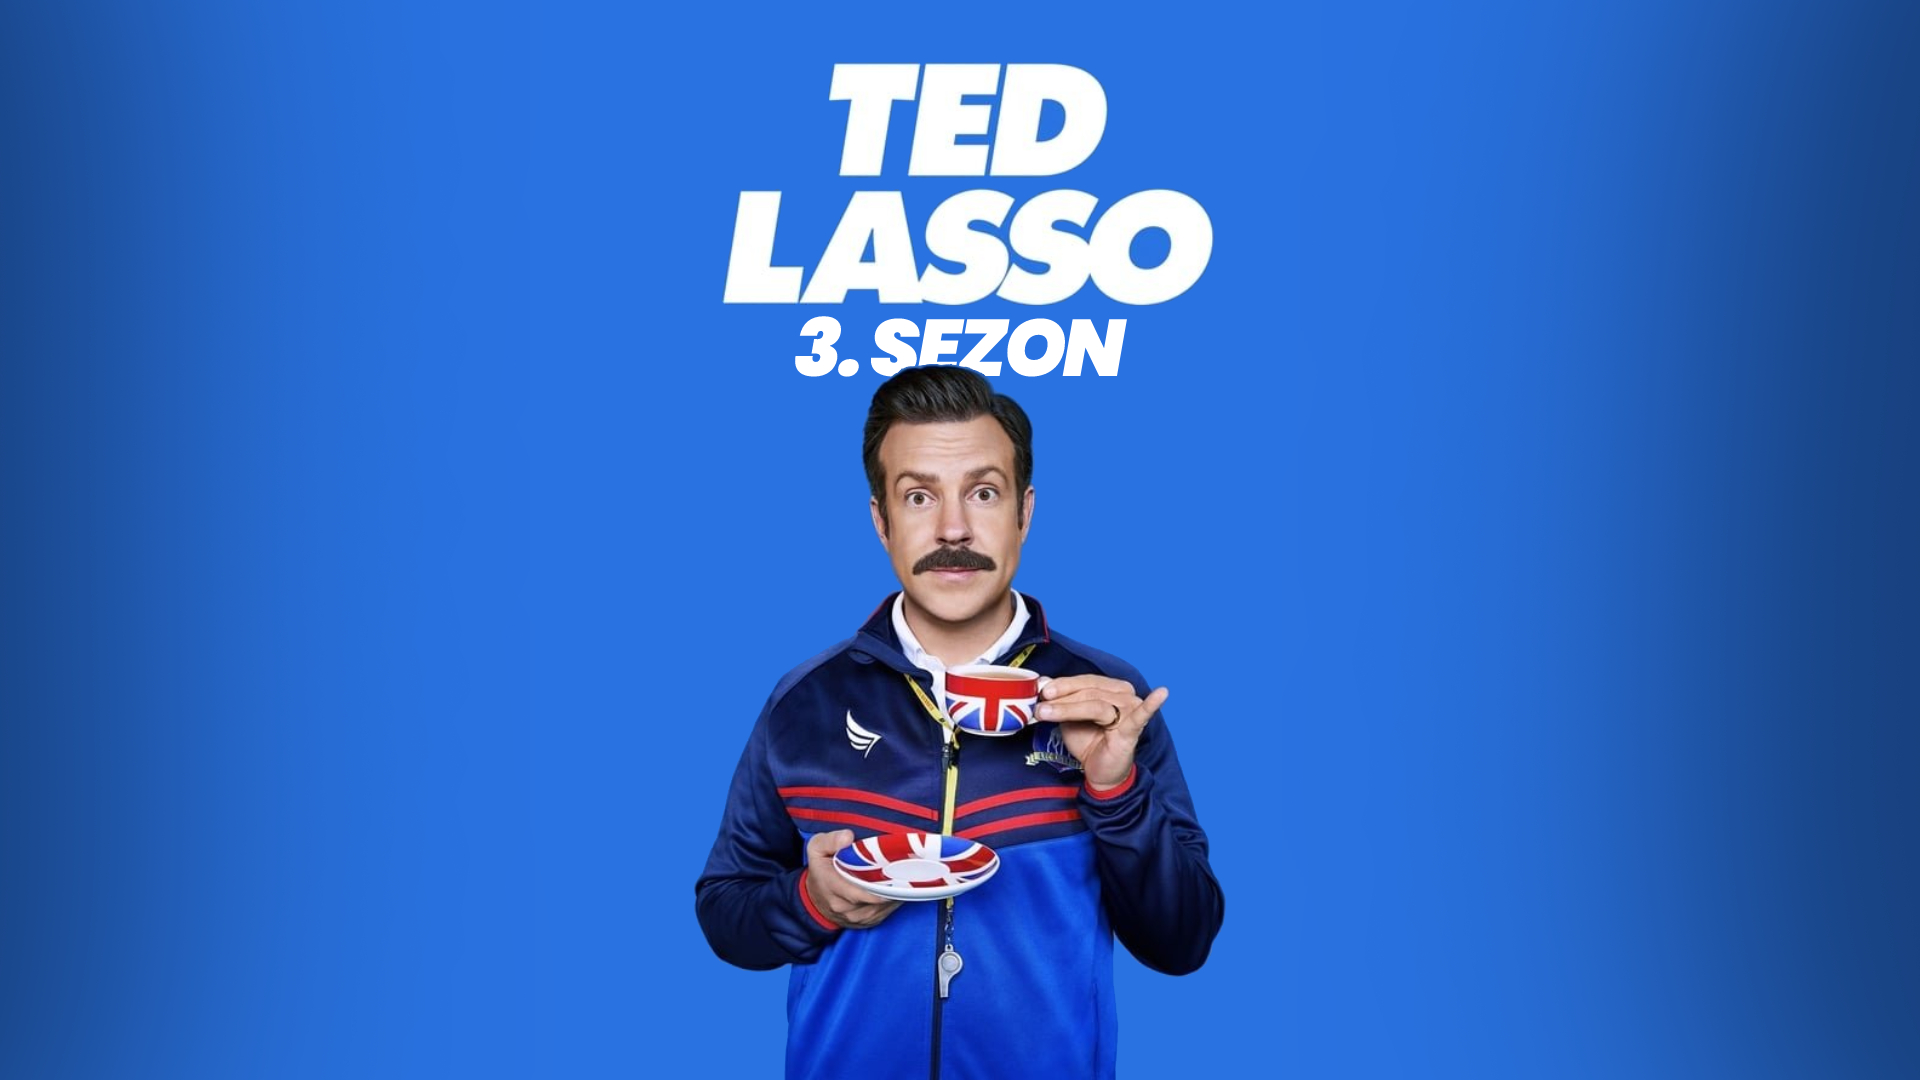 Ted Lasso - 3. sezon